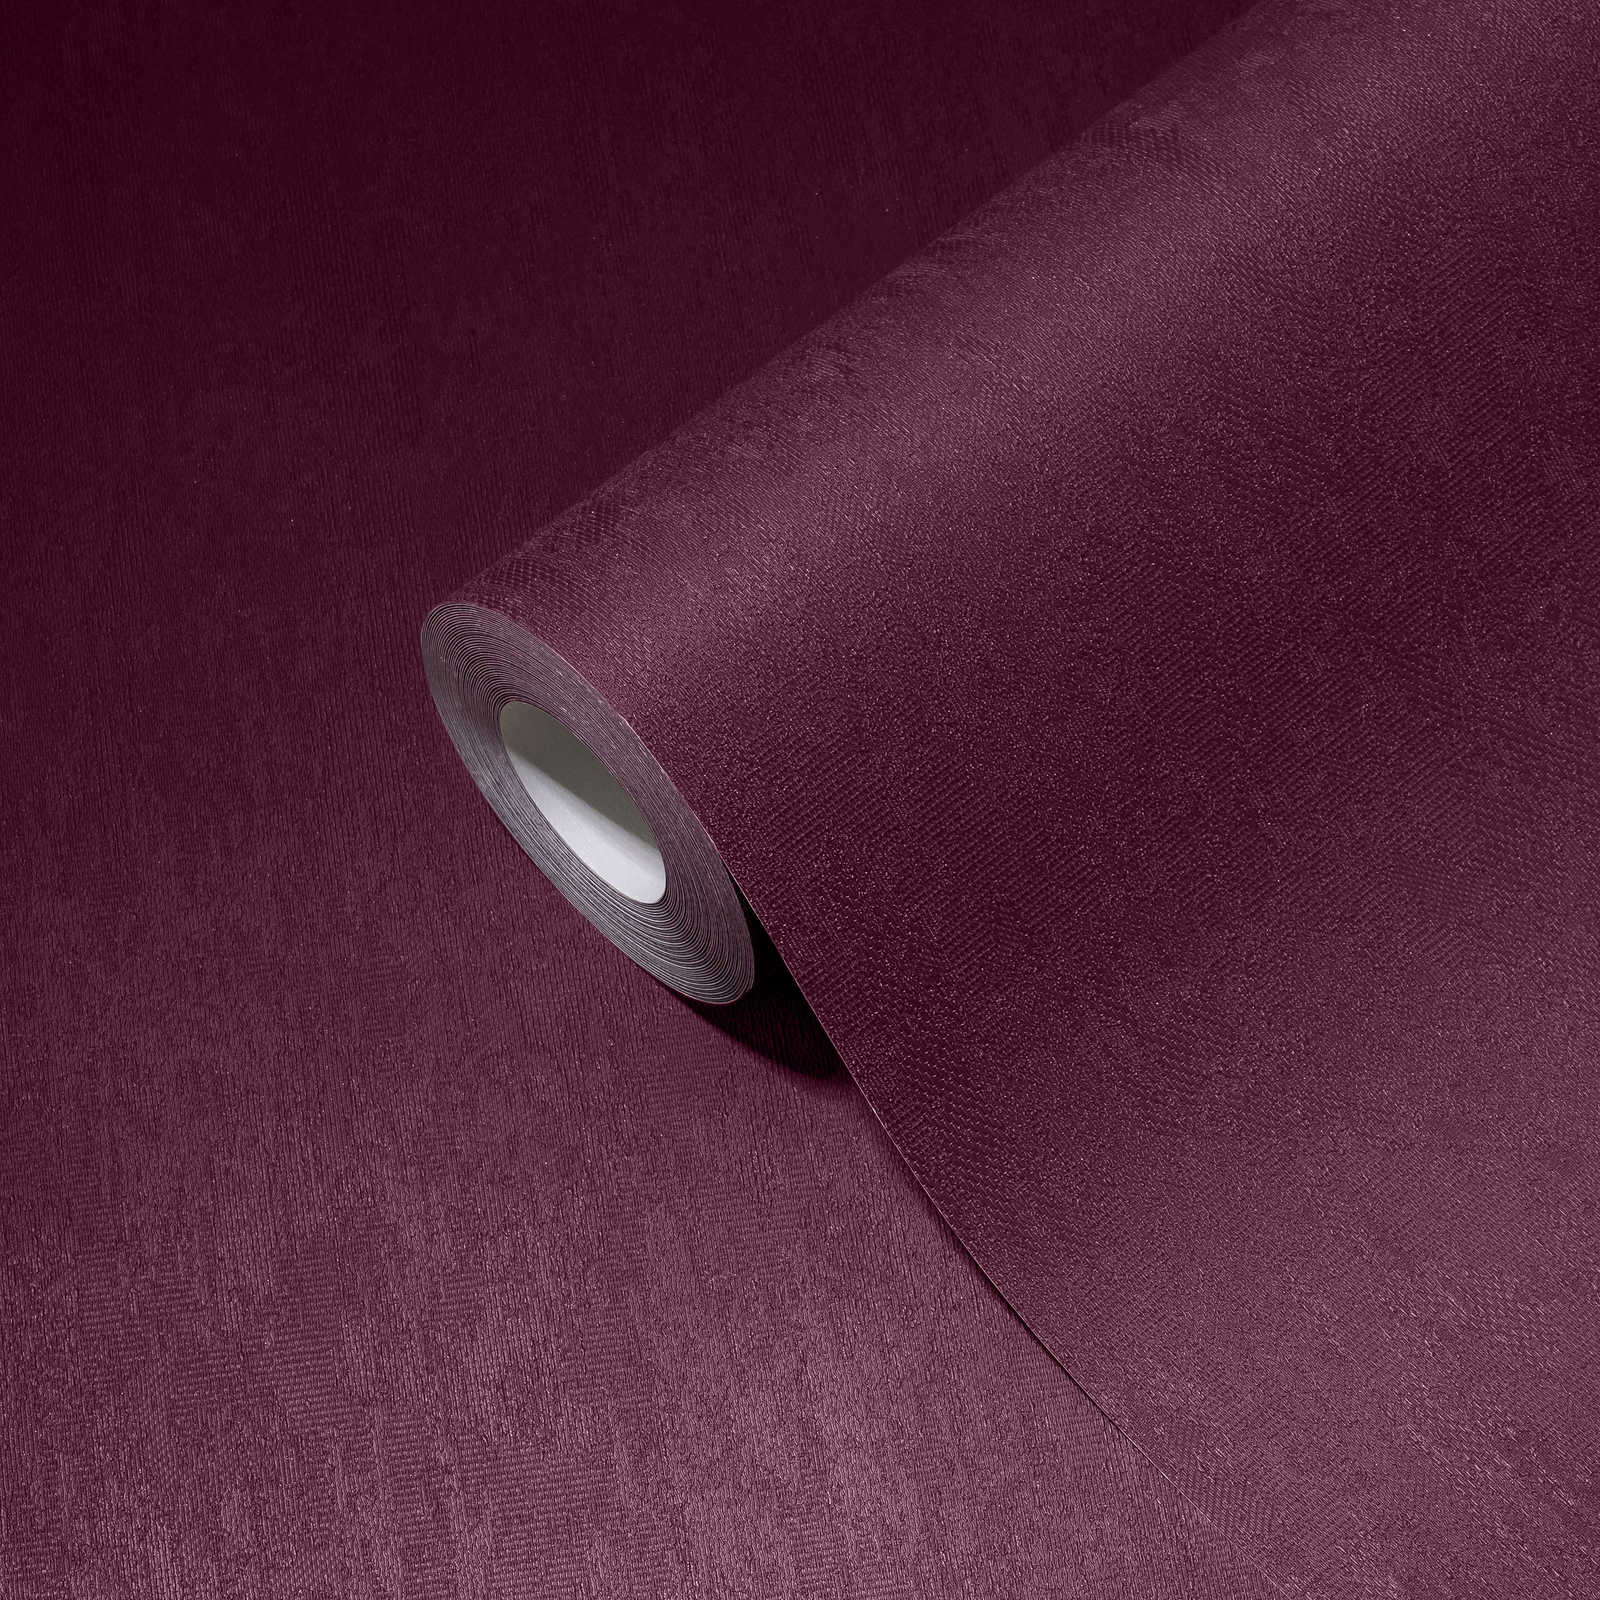             Plain wallpaper dark purple with texture effect
        